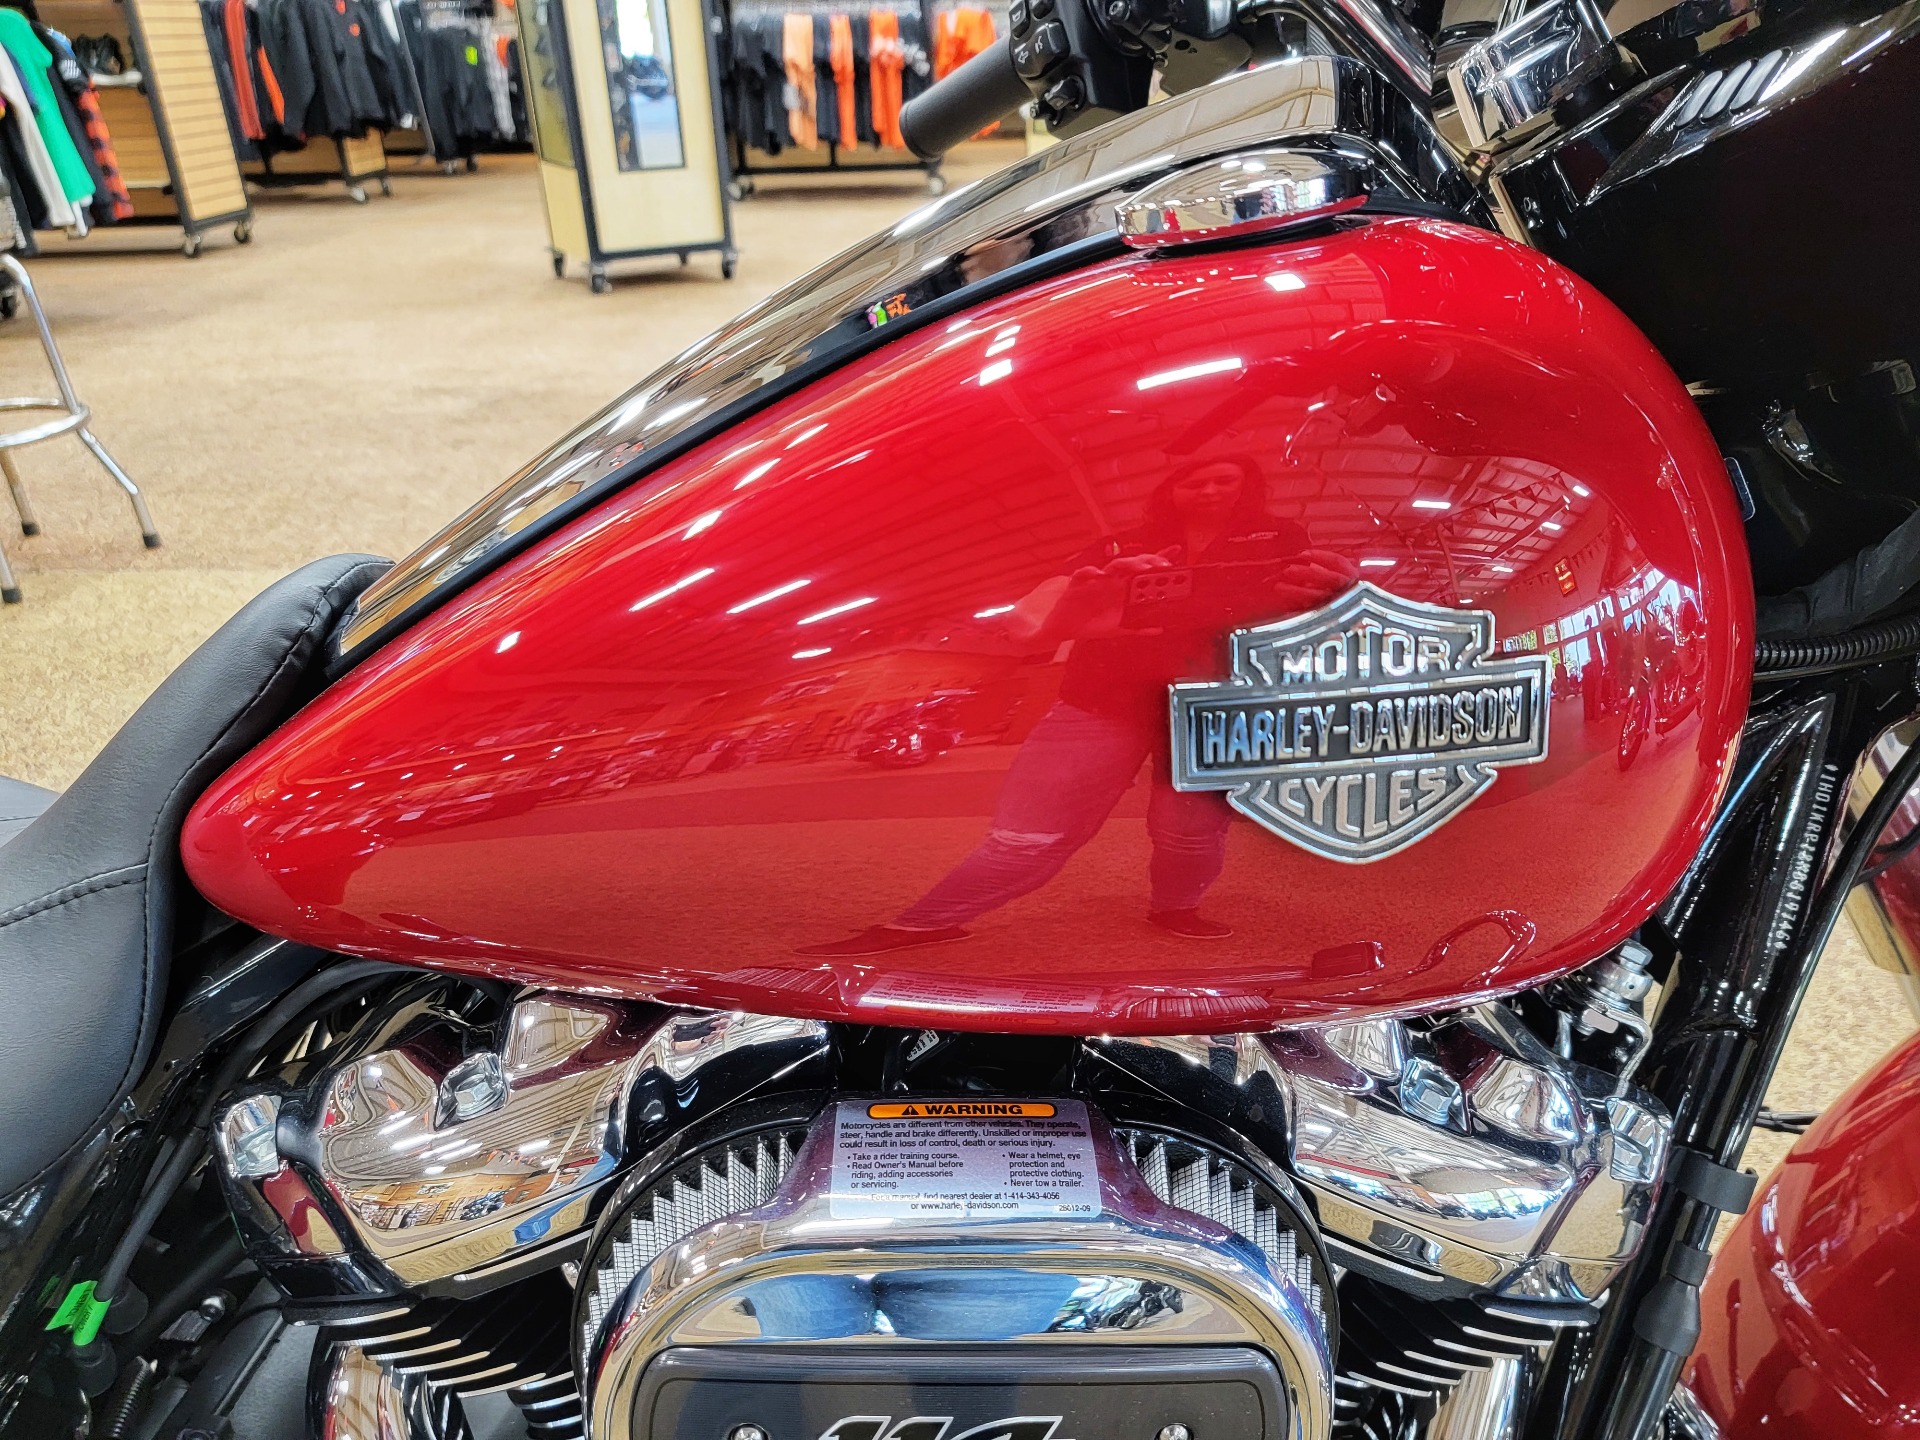 New 2021 Harley Davidson Street Glide Special Billiard Red Chrome Option Motorcycles In Sauk Rapids Mn Fl619746